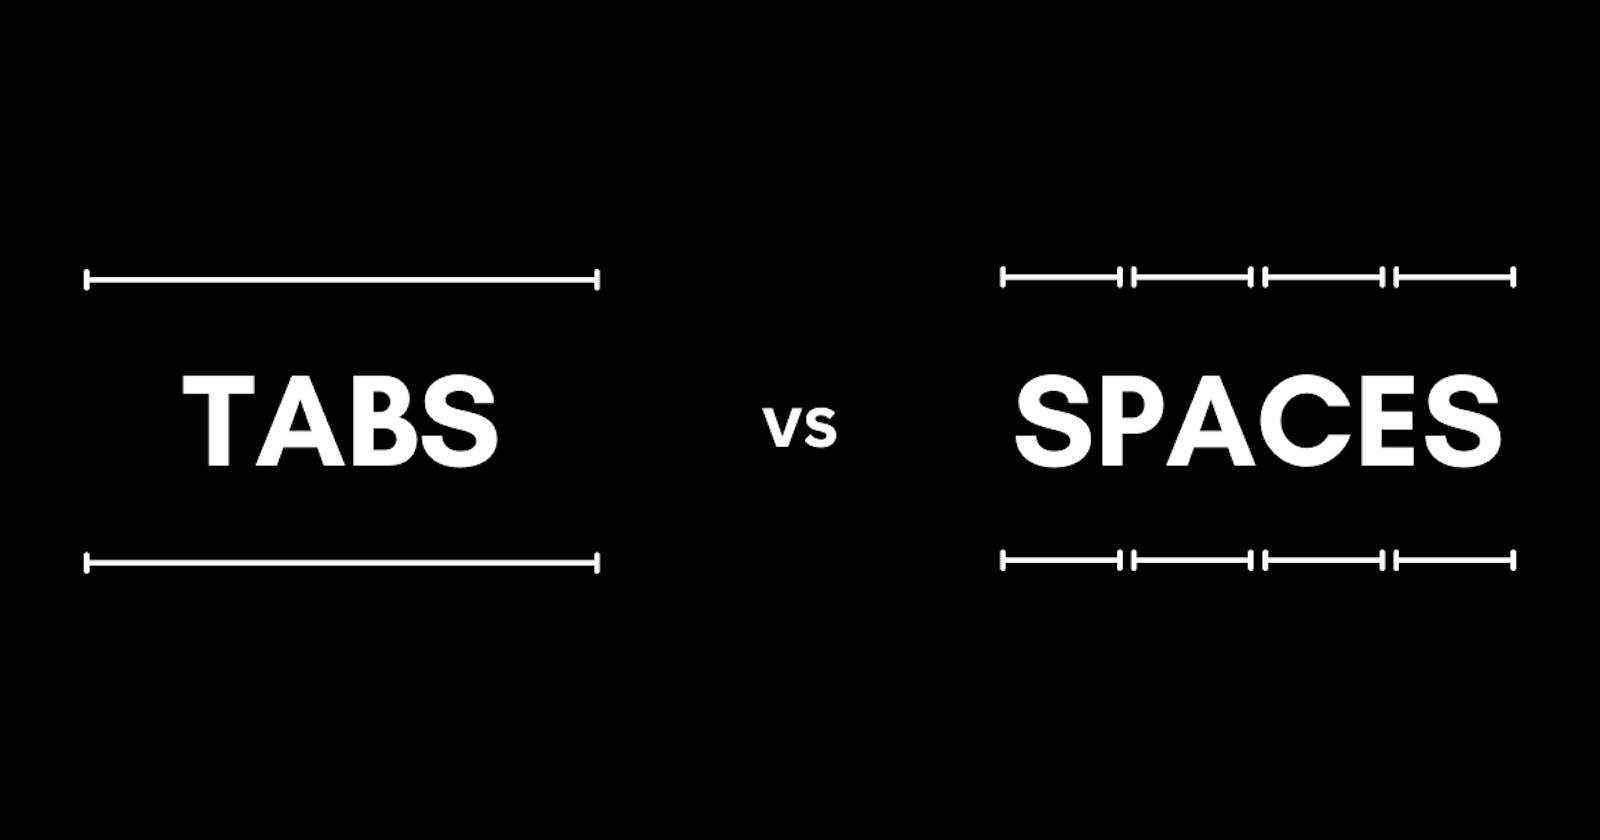 Spaces vs Tabs: The Great Python Debate